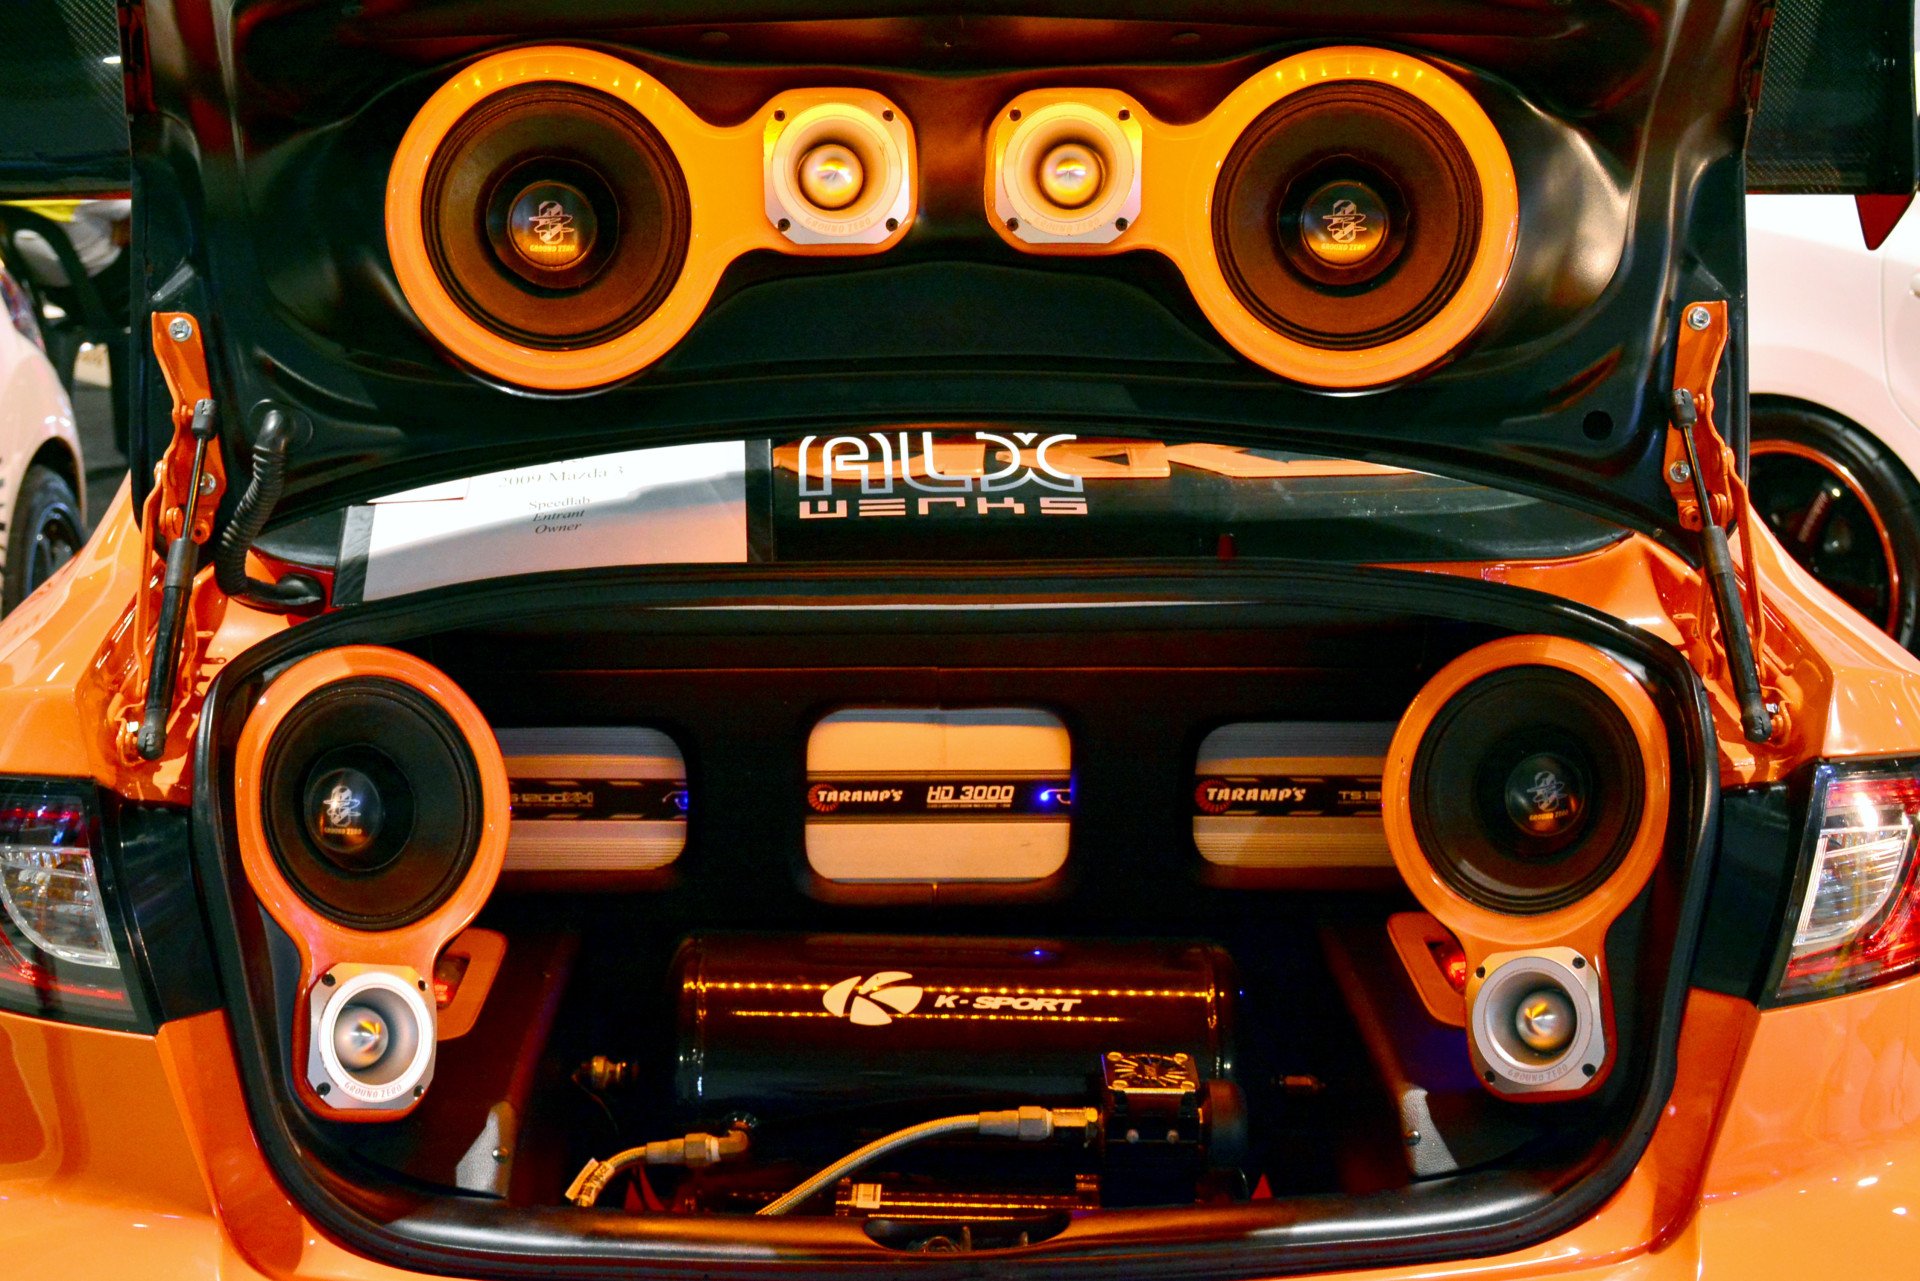 Automotivo love 69. Колонки кар аудио кар аудио. Автозвук машины. Аудиосистема автомобиля. Акустика в машину.